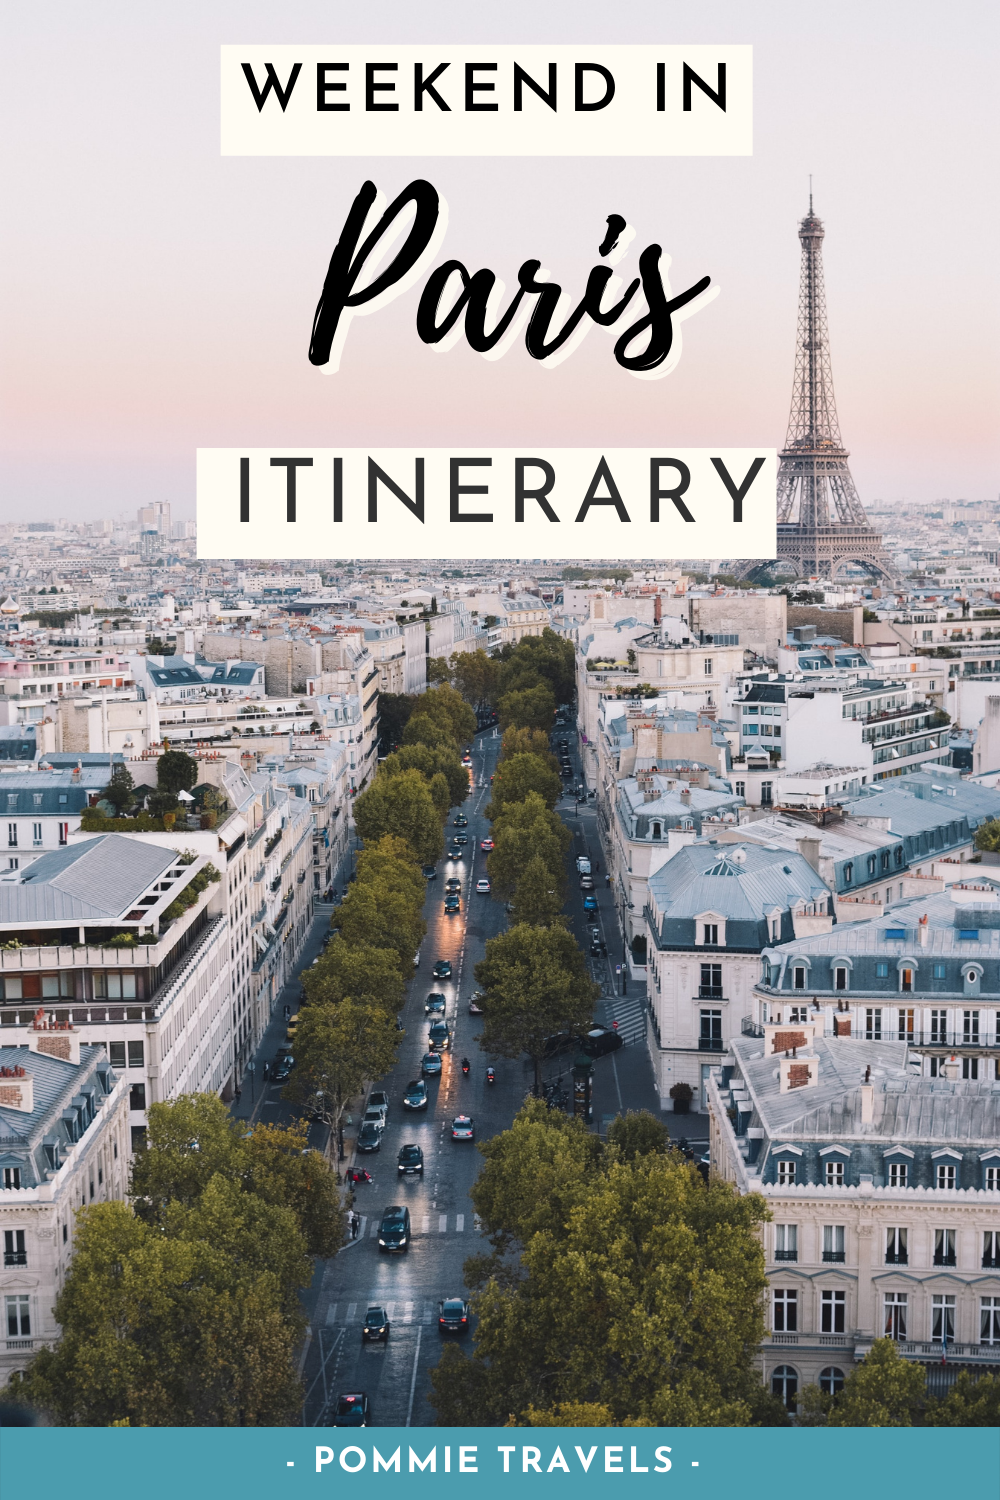 Weekend in Paris Itinerary